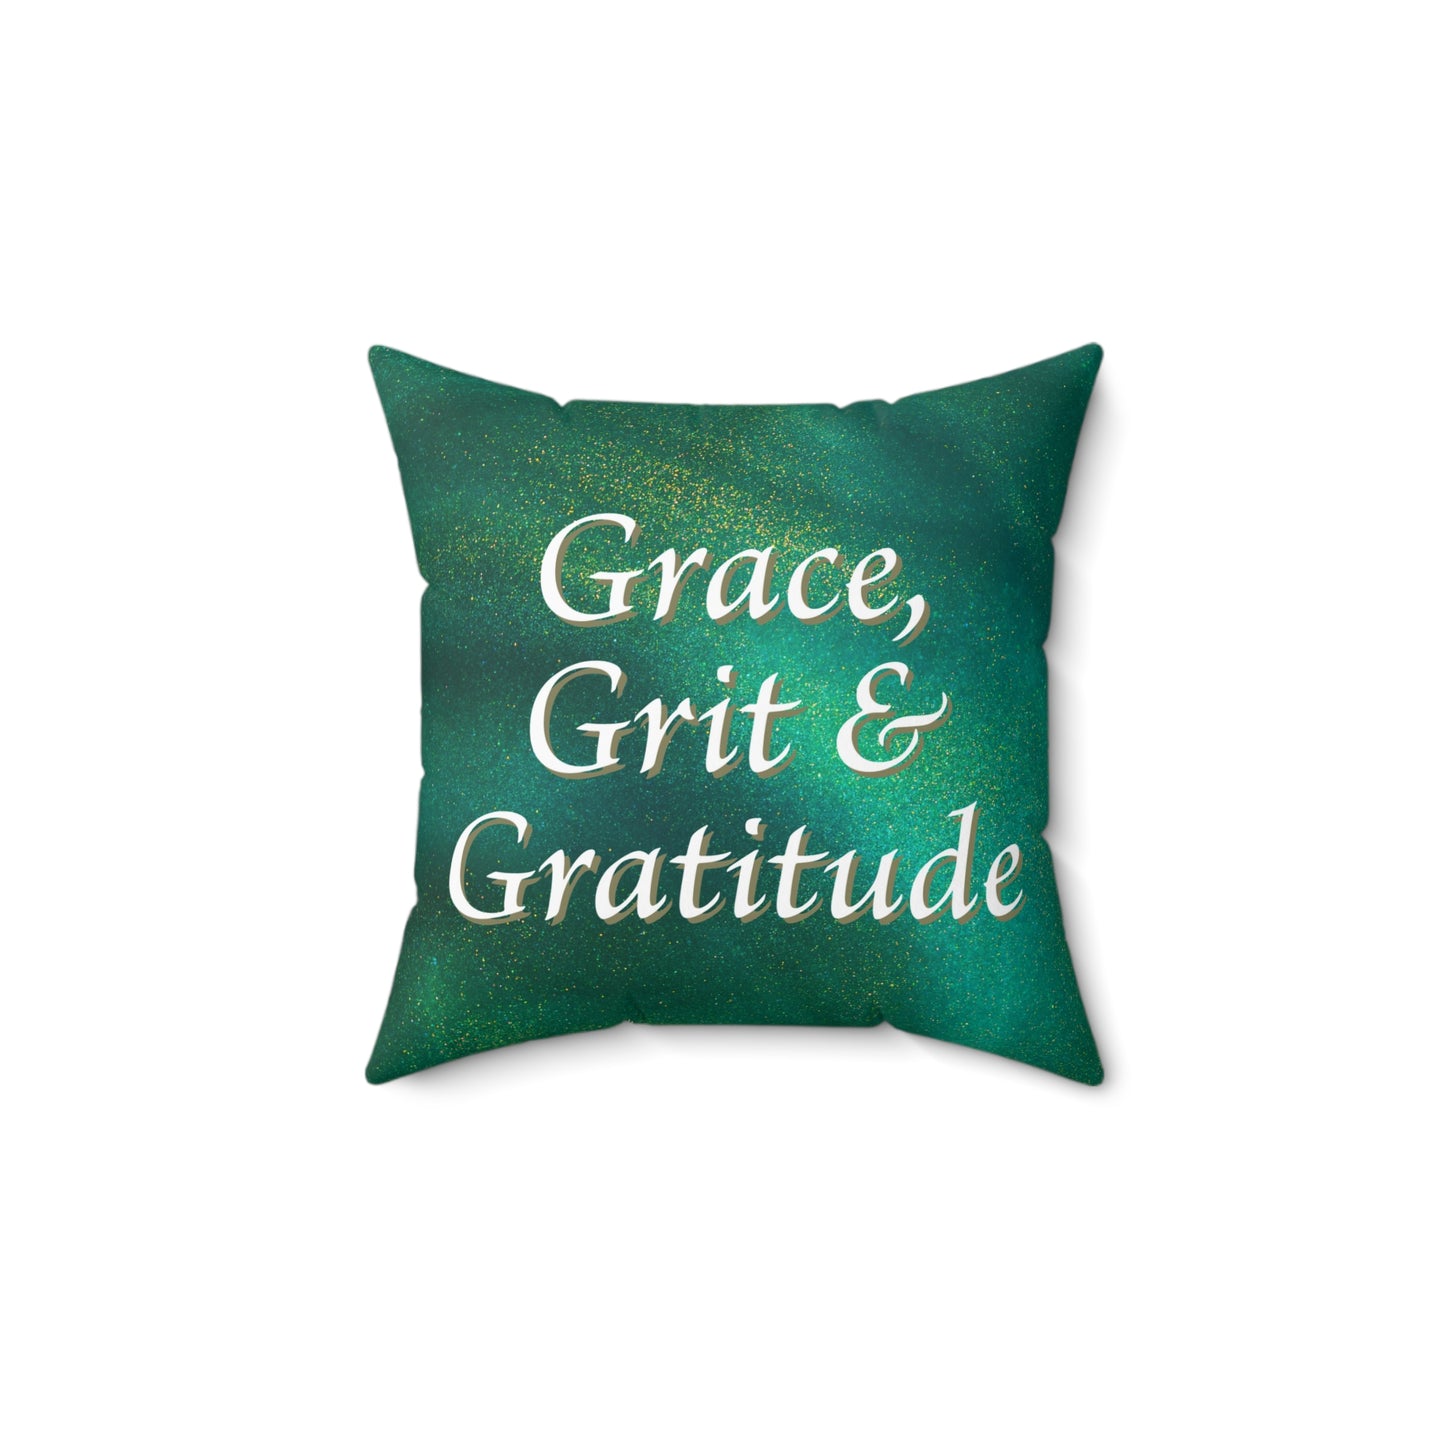 Spun Polyester Square Pillow - Grace, Grit, & Gratitude - Green & Gold Swirl Background